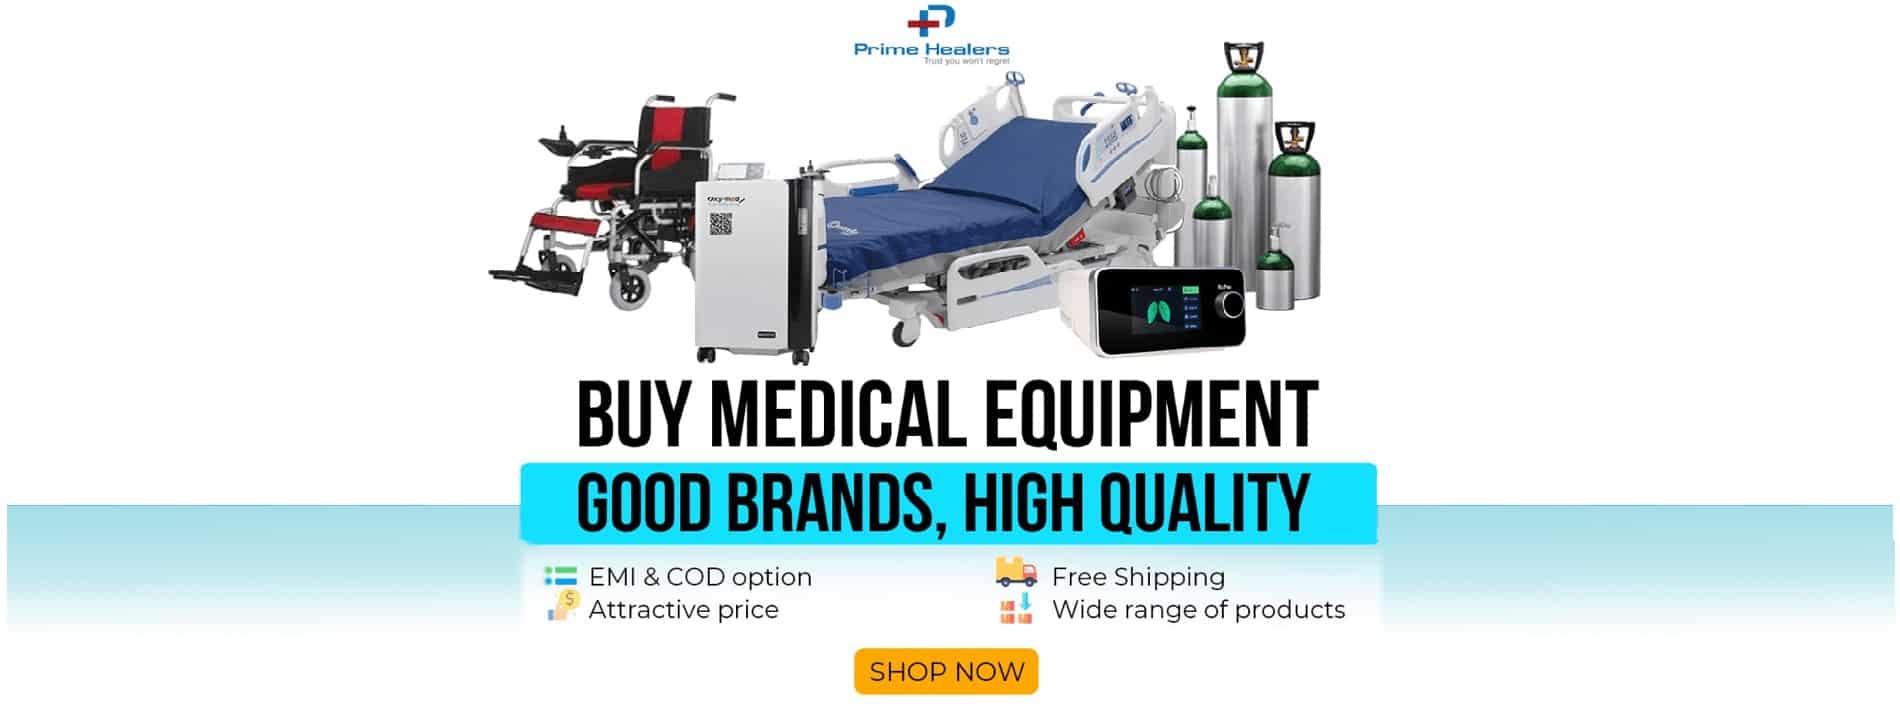 Buy medical equipment in India